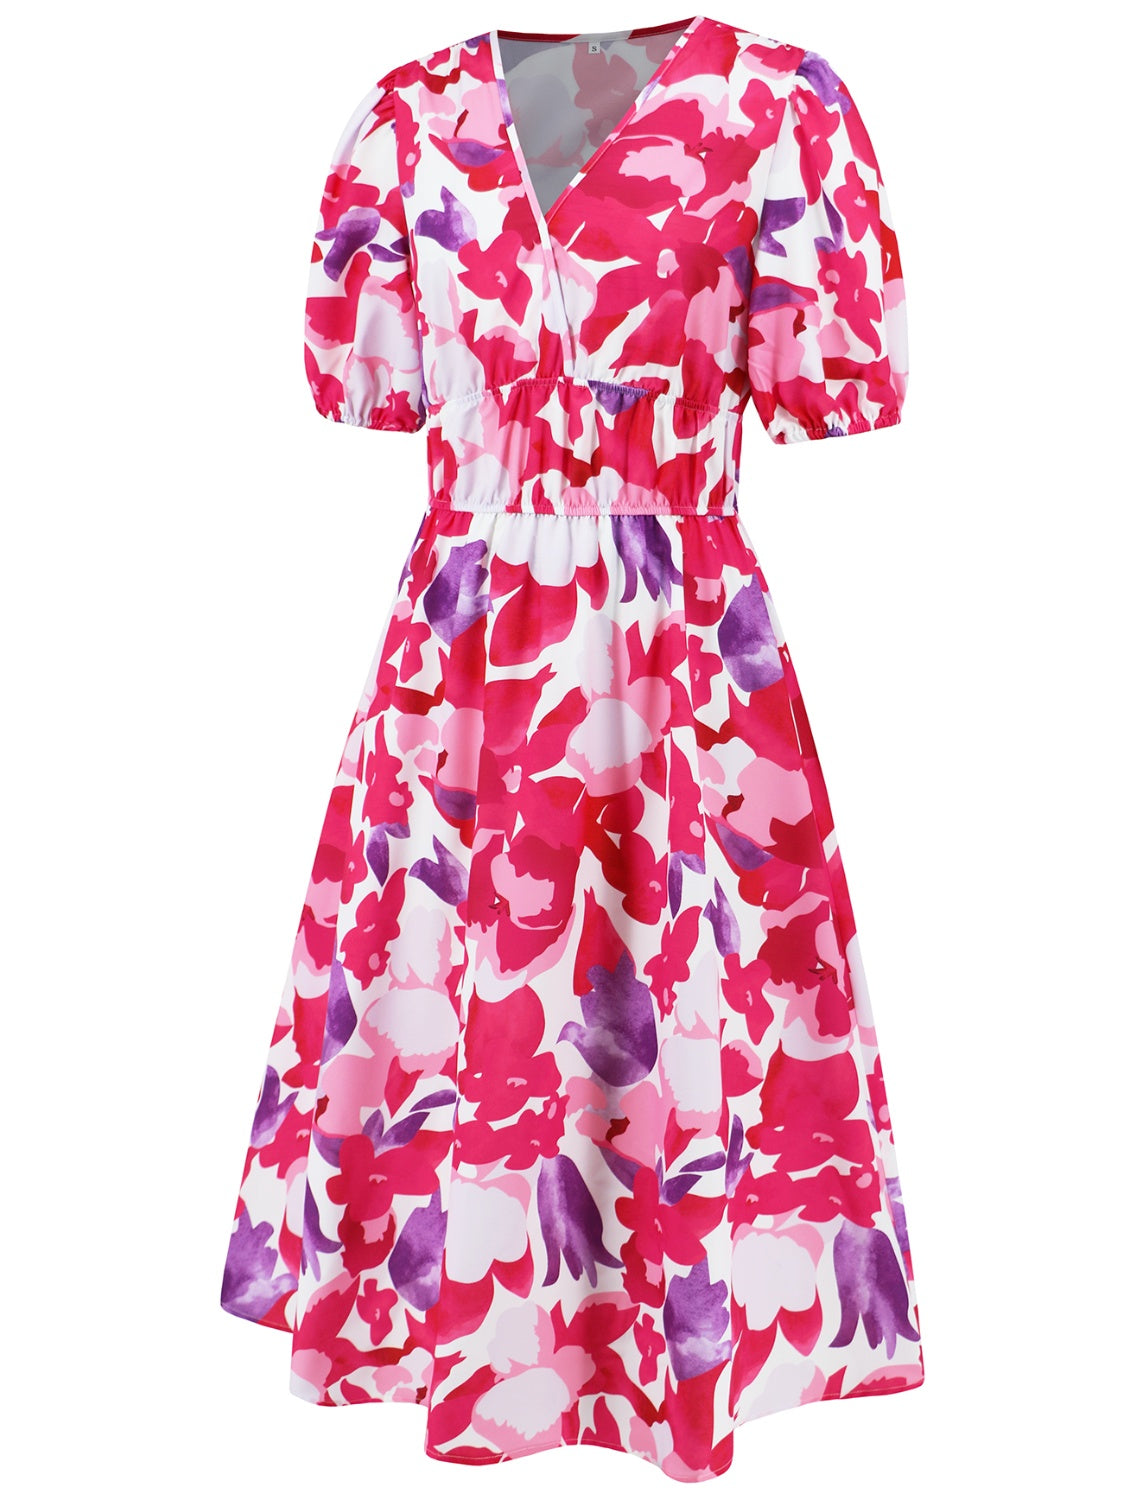 Floral Printed Short Sleeve Midi Dress